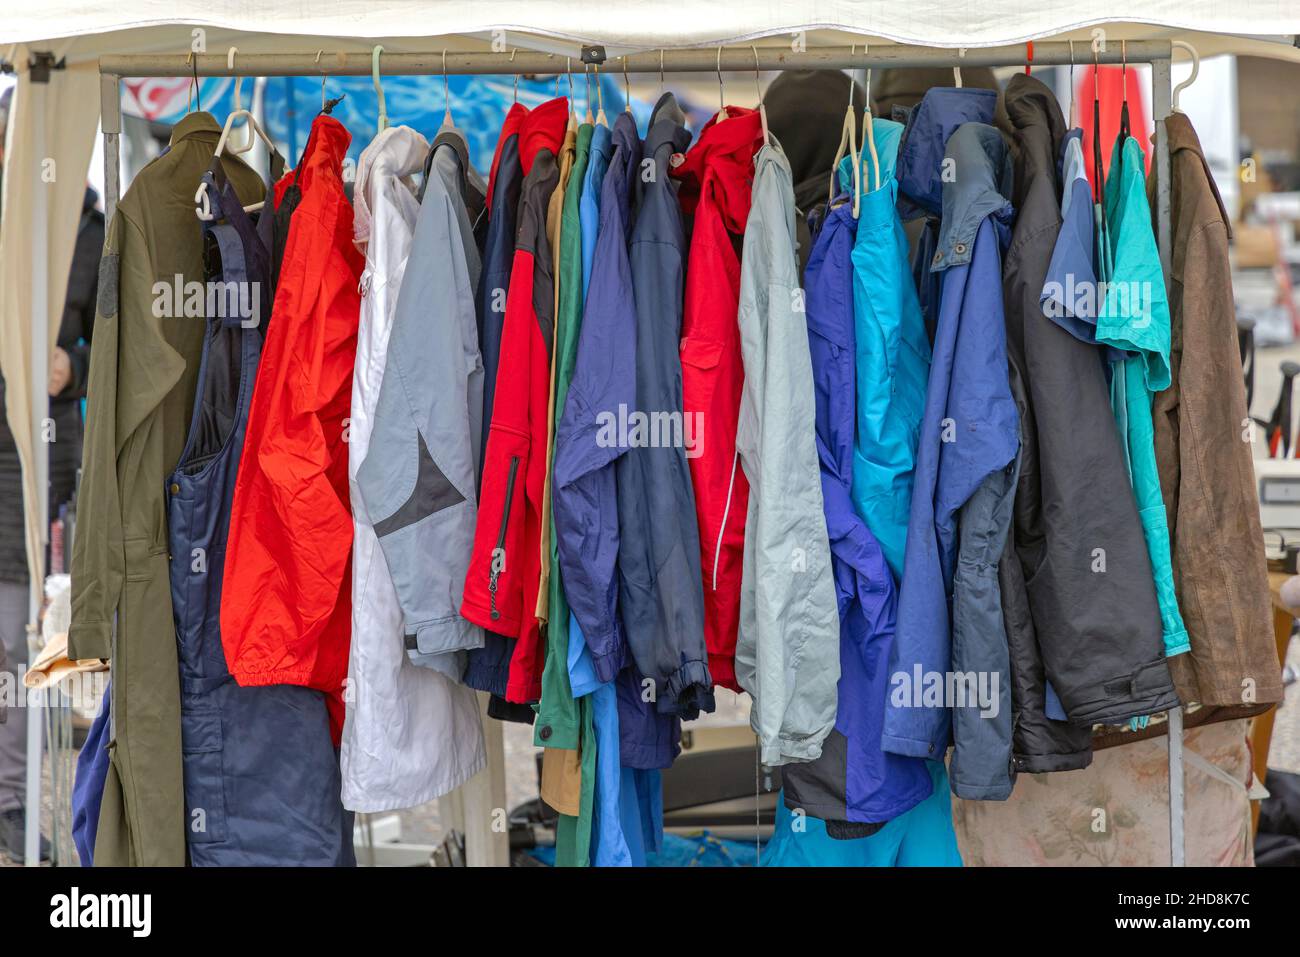 Rain Coats Jackets Gear Clothing for Bad Weather Rack Stock Photo